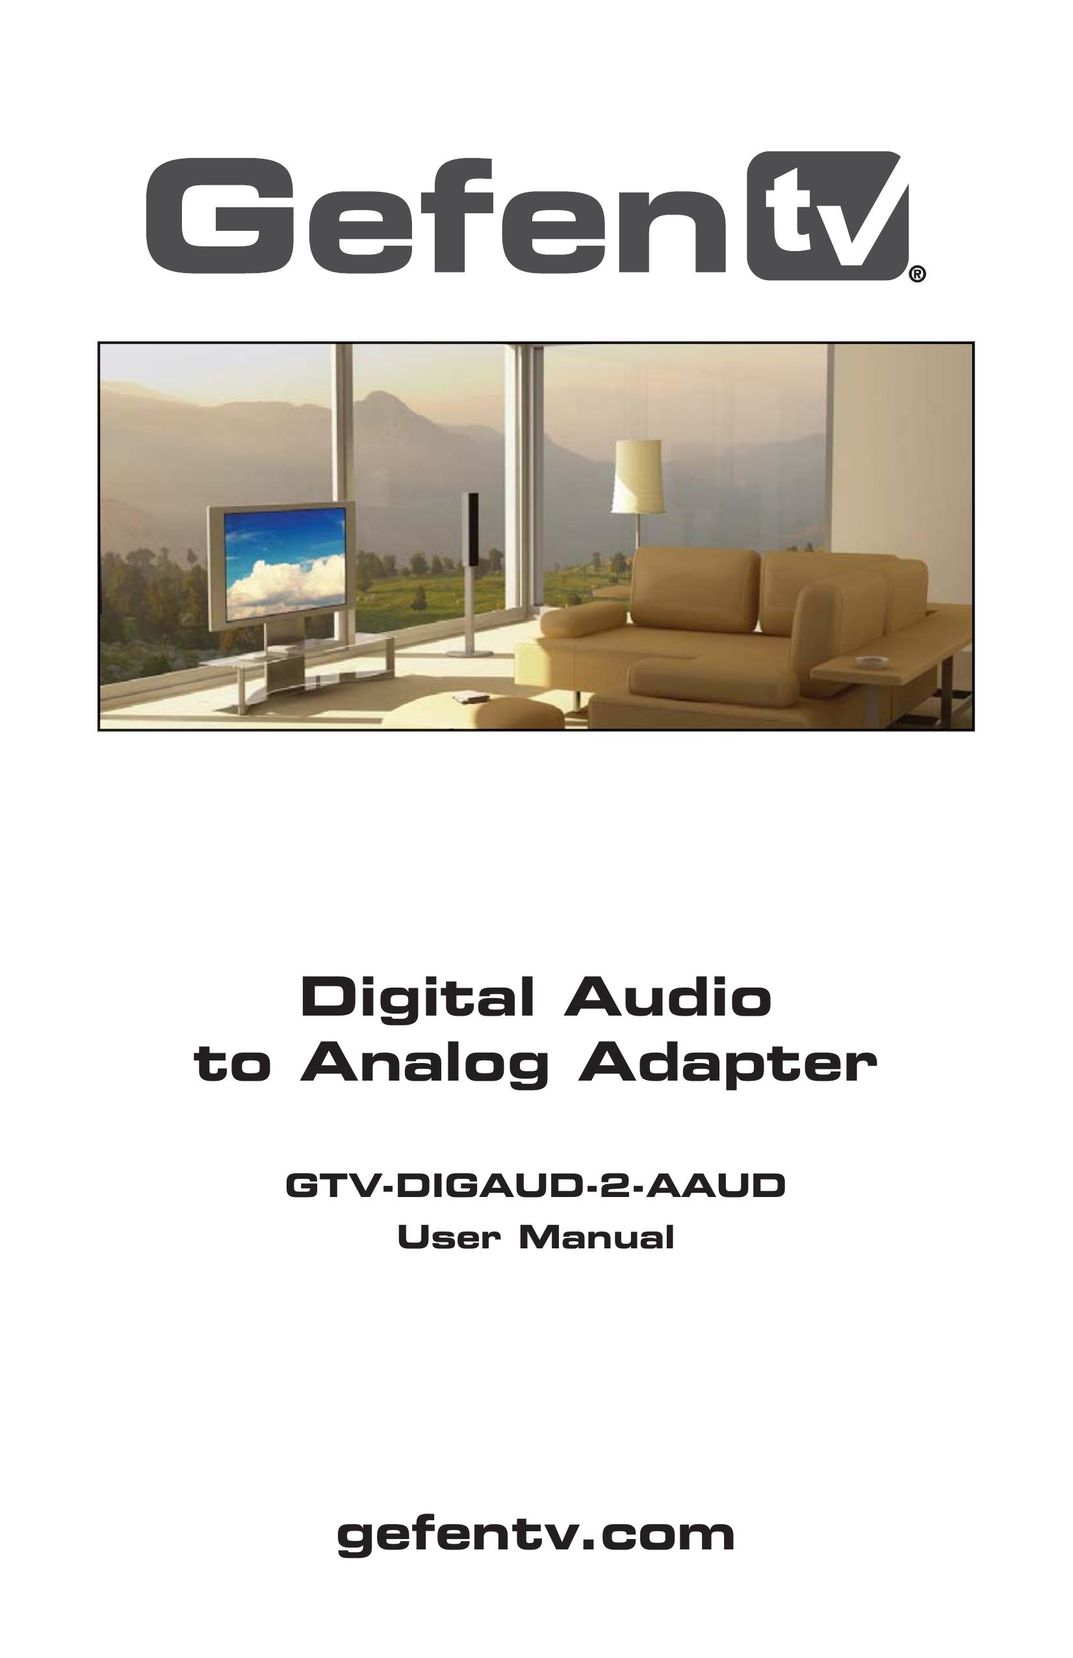 Gefen GTV-DIGAUD-2-AAUD Network Card User Manual